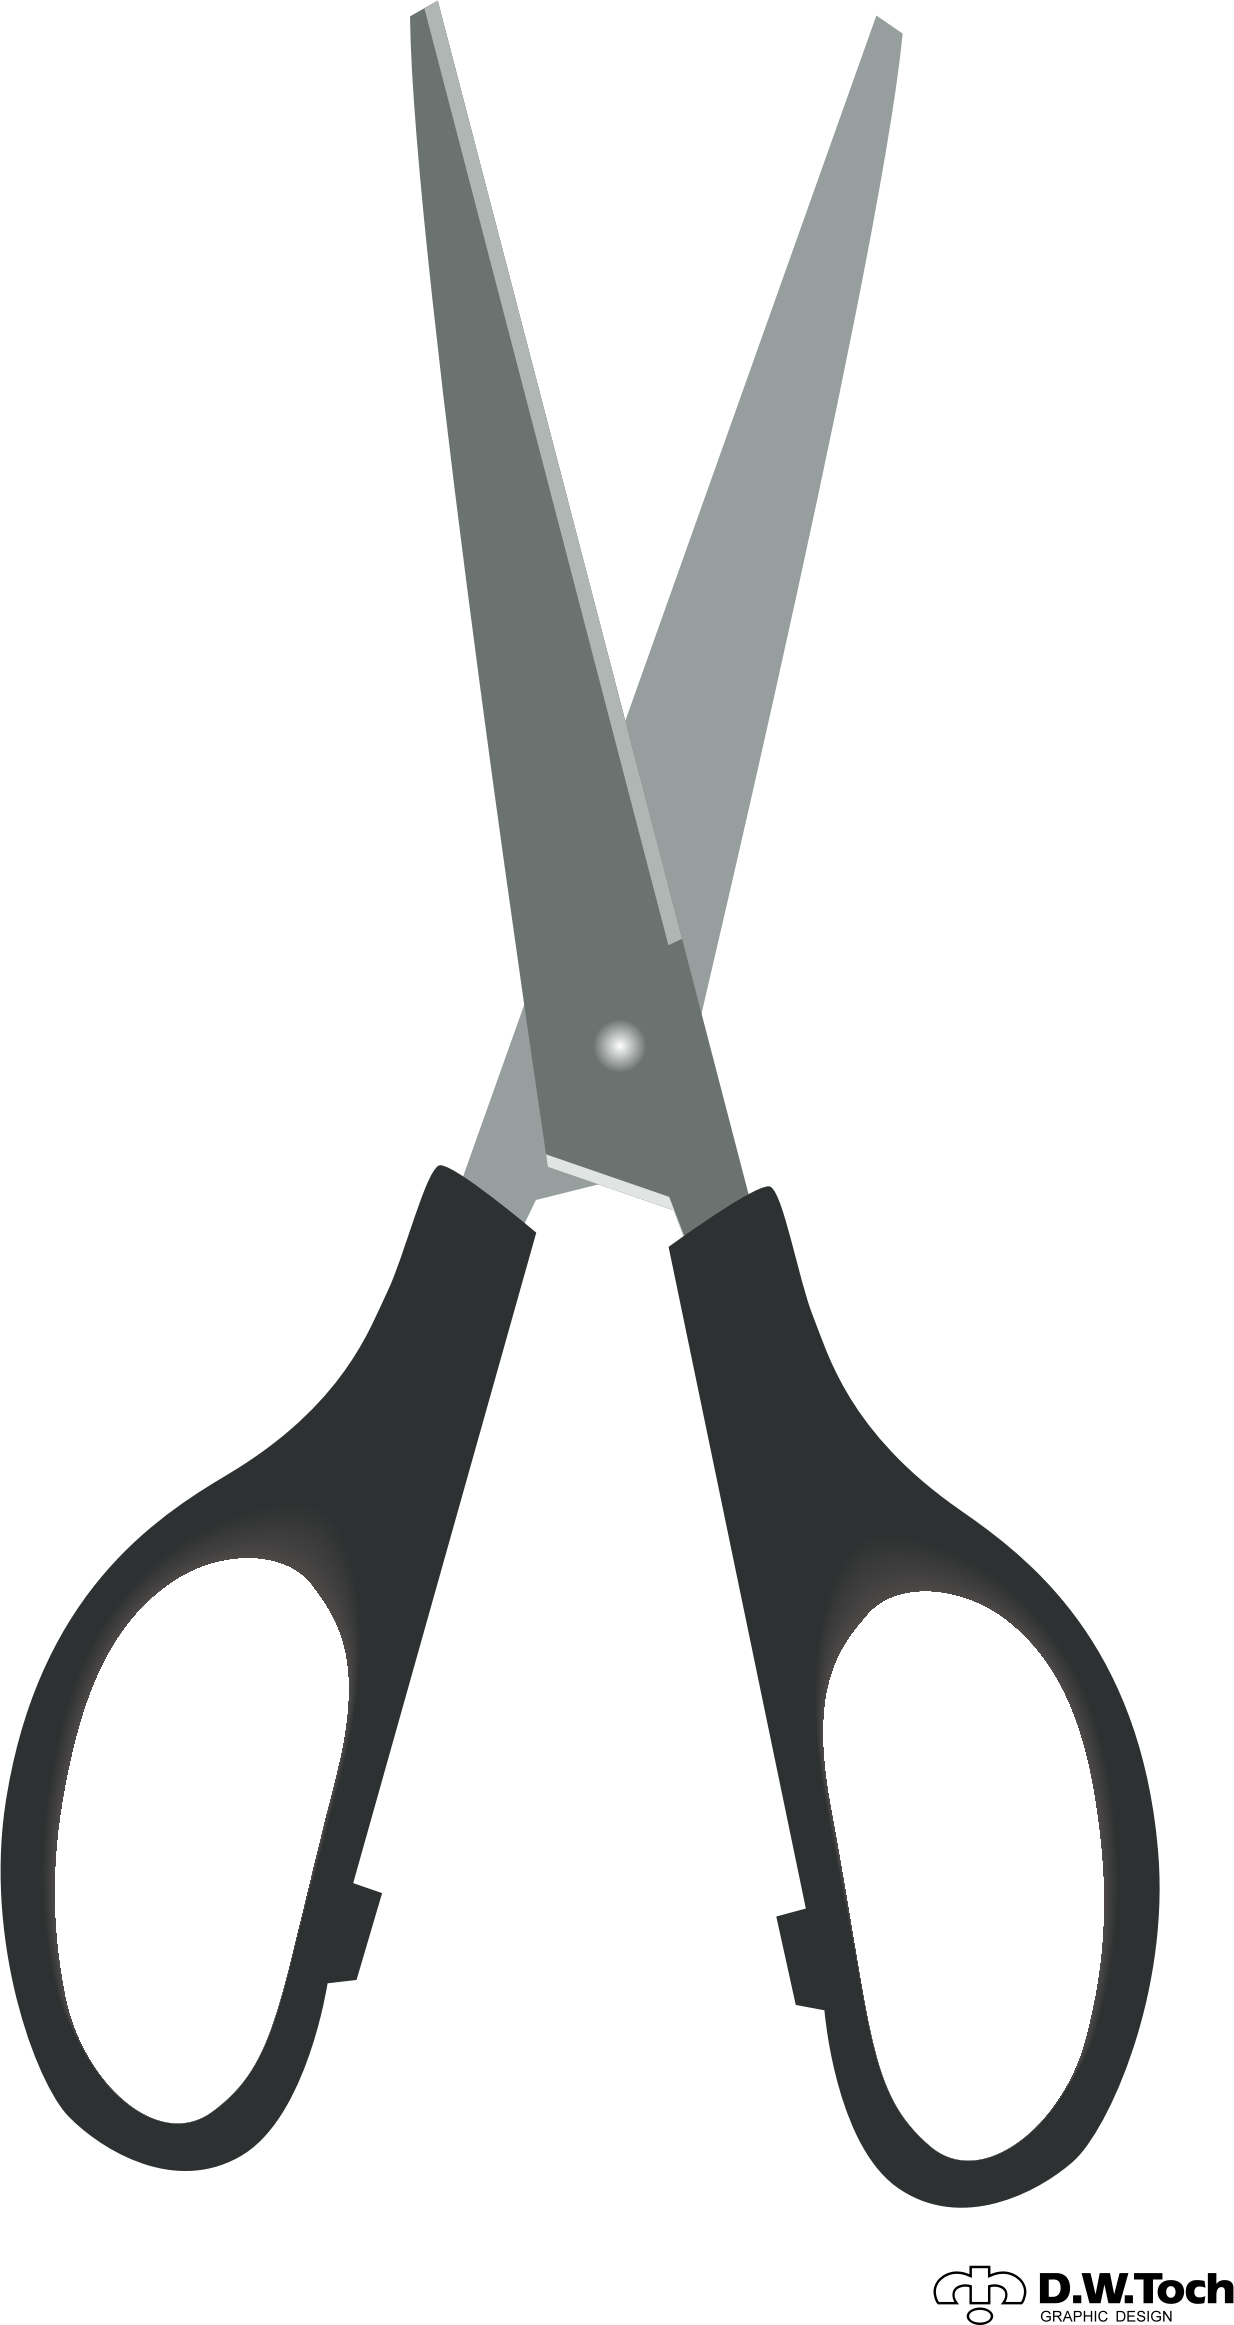 Knife scissors